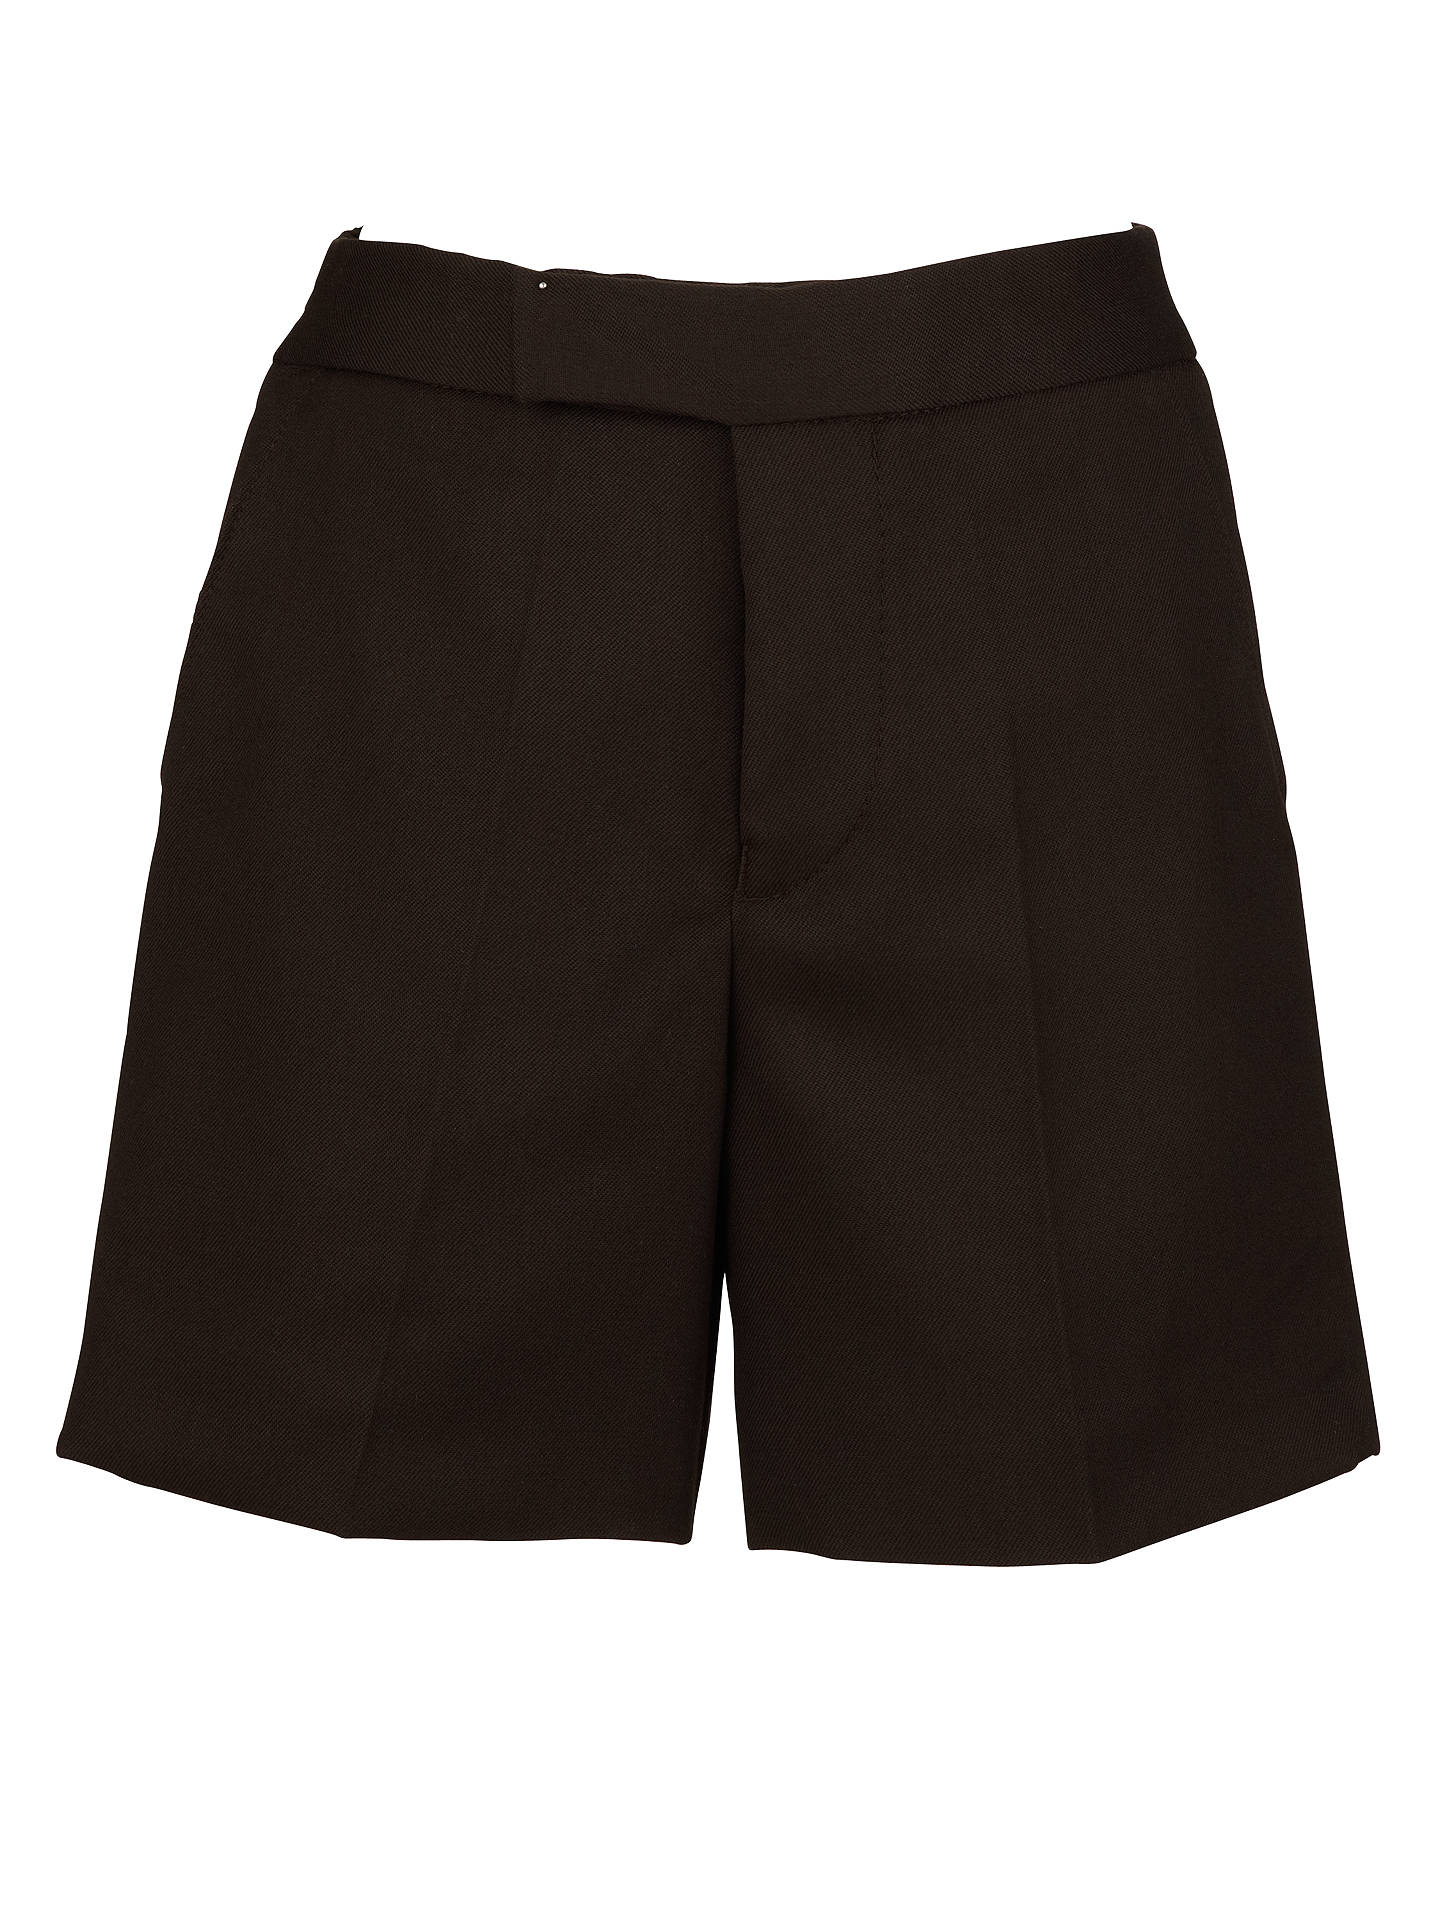 Image result for black shorts school boys"